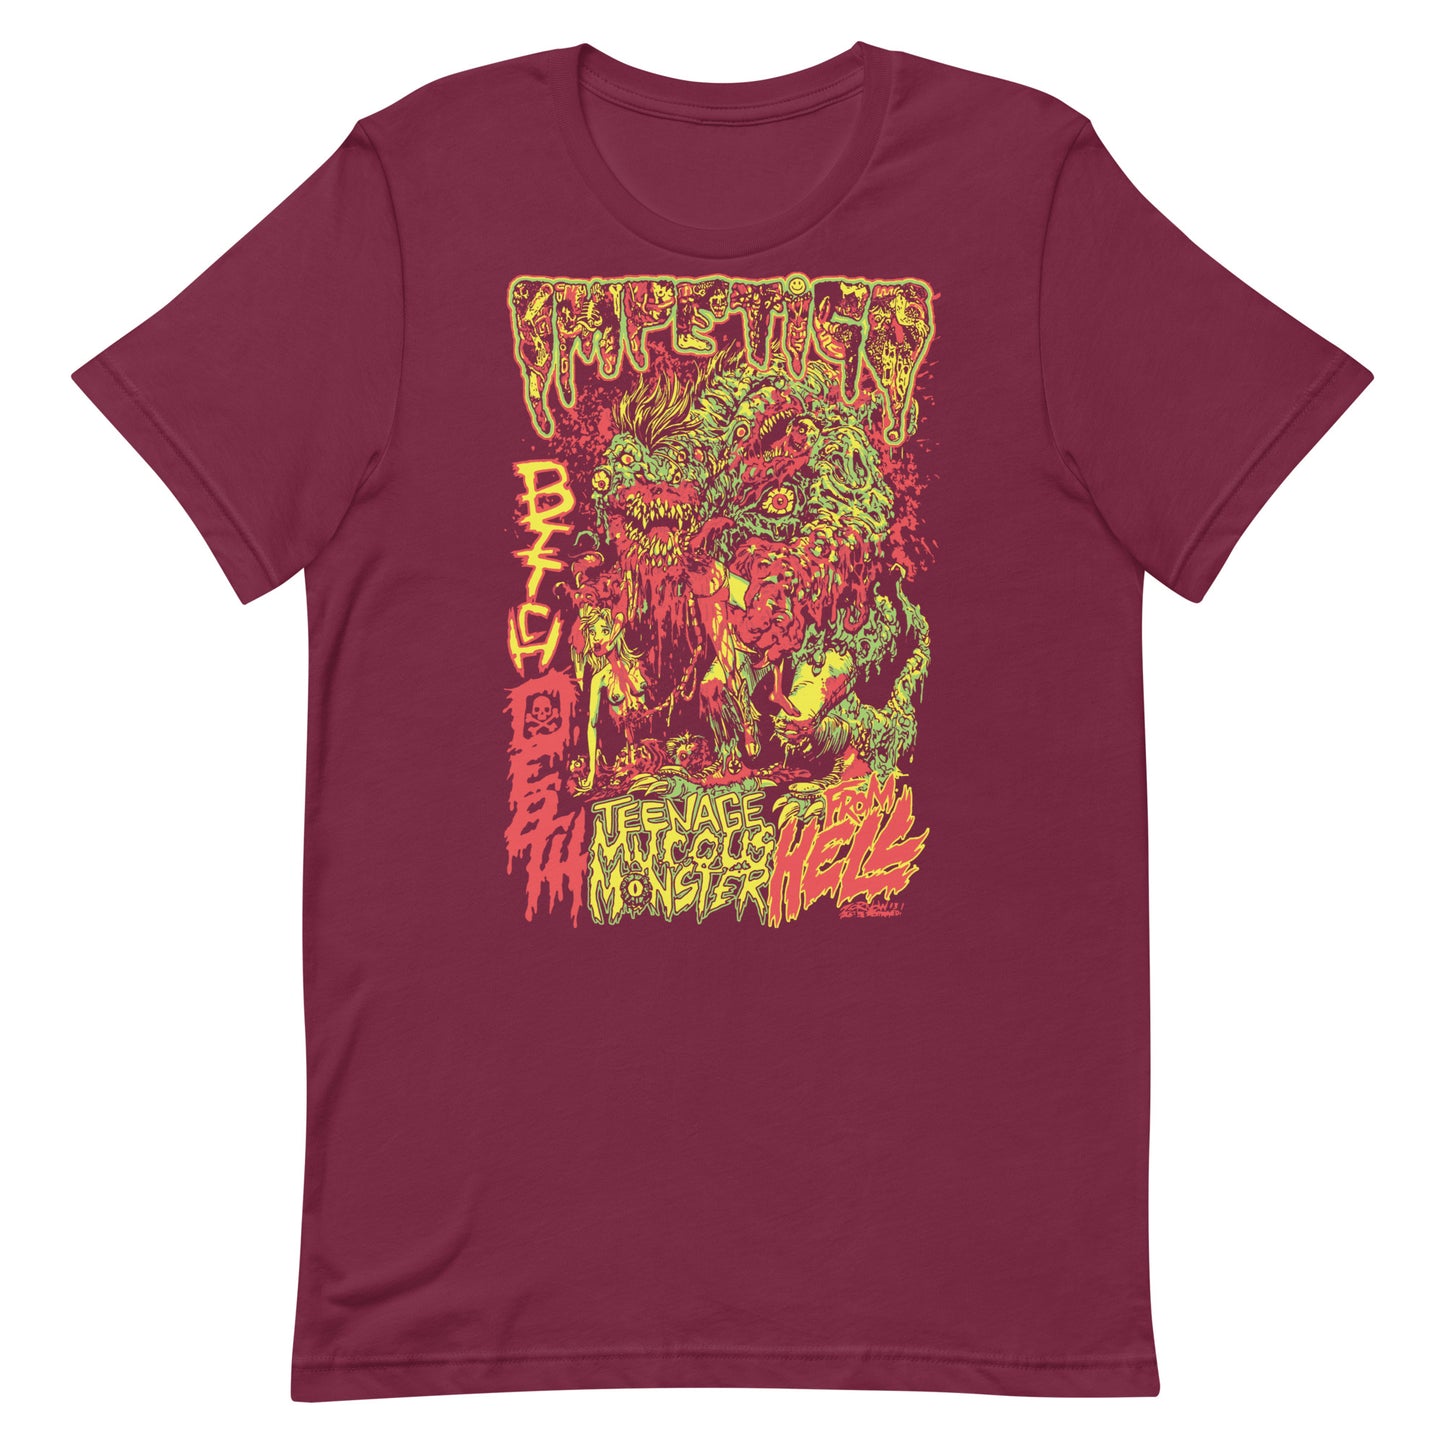 Impetigo - Teenage Mucous Monster T-Shirt